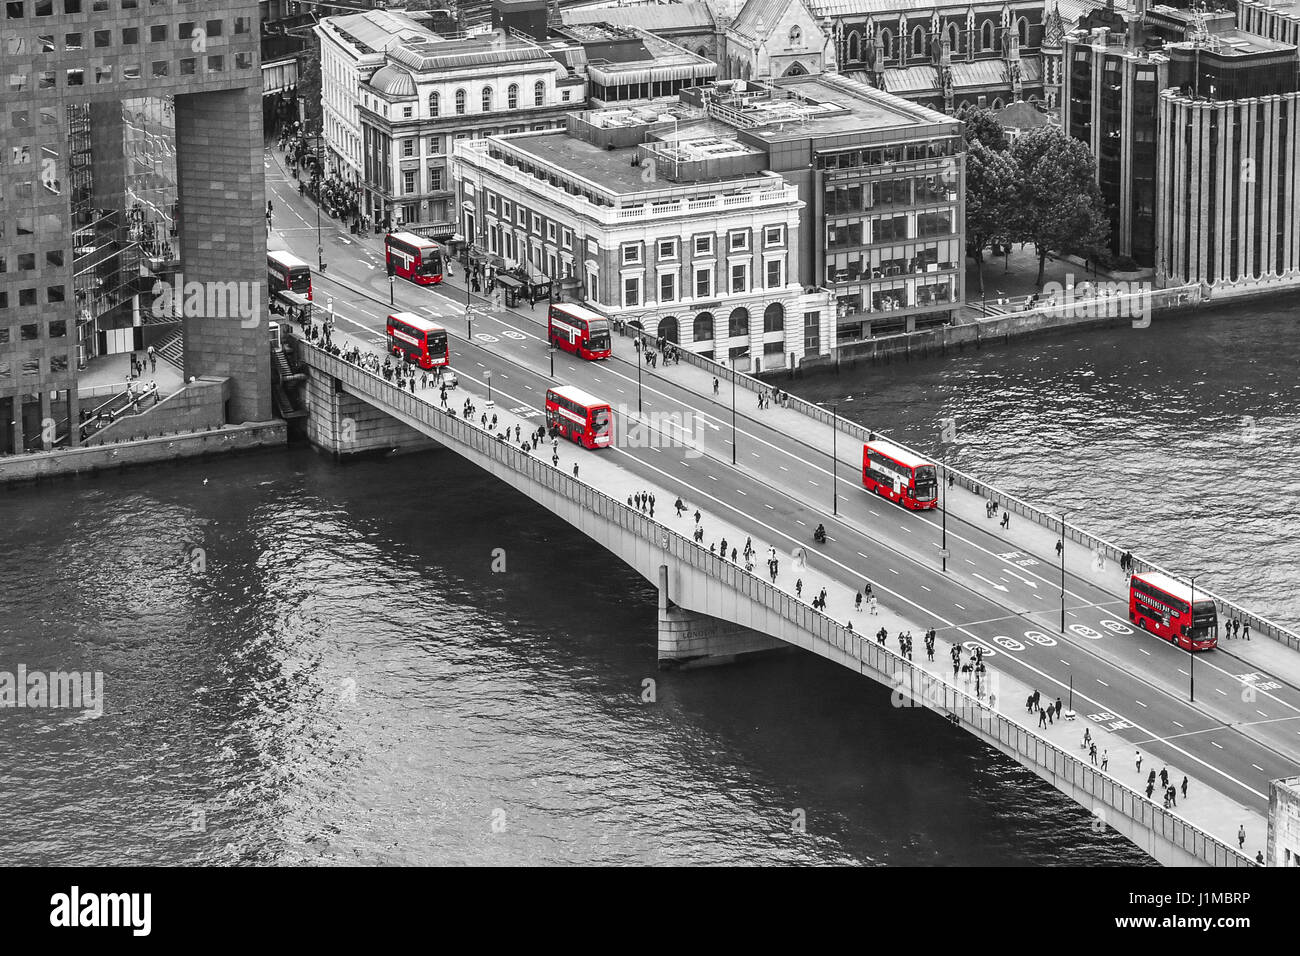 Red double-deckers on London Bridge, London, UK Stock Photo